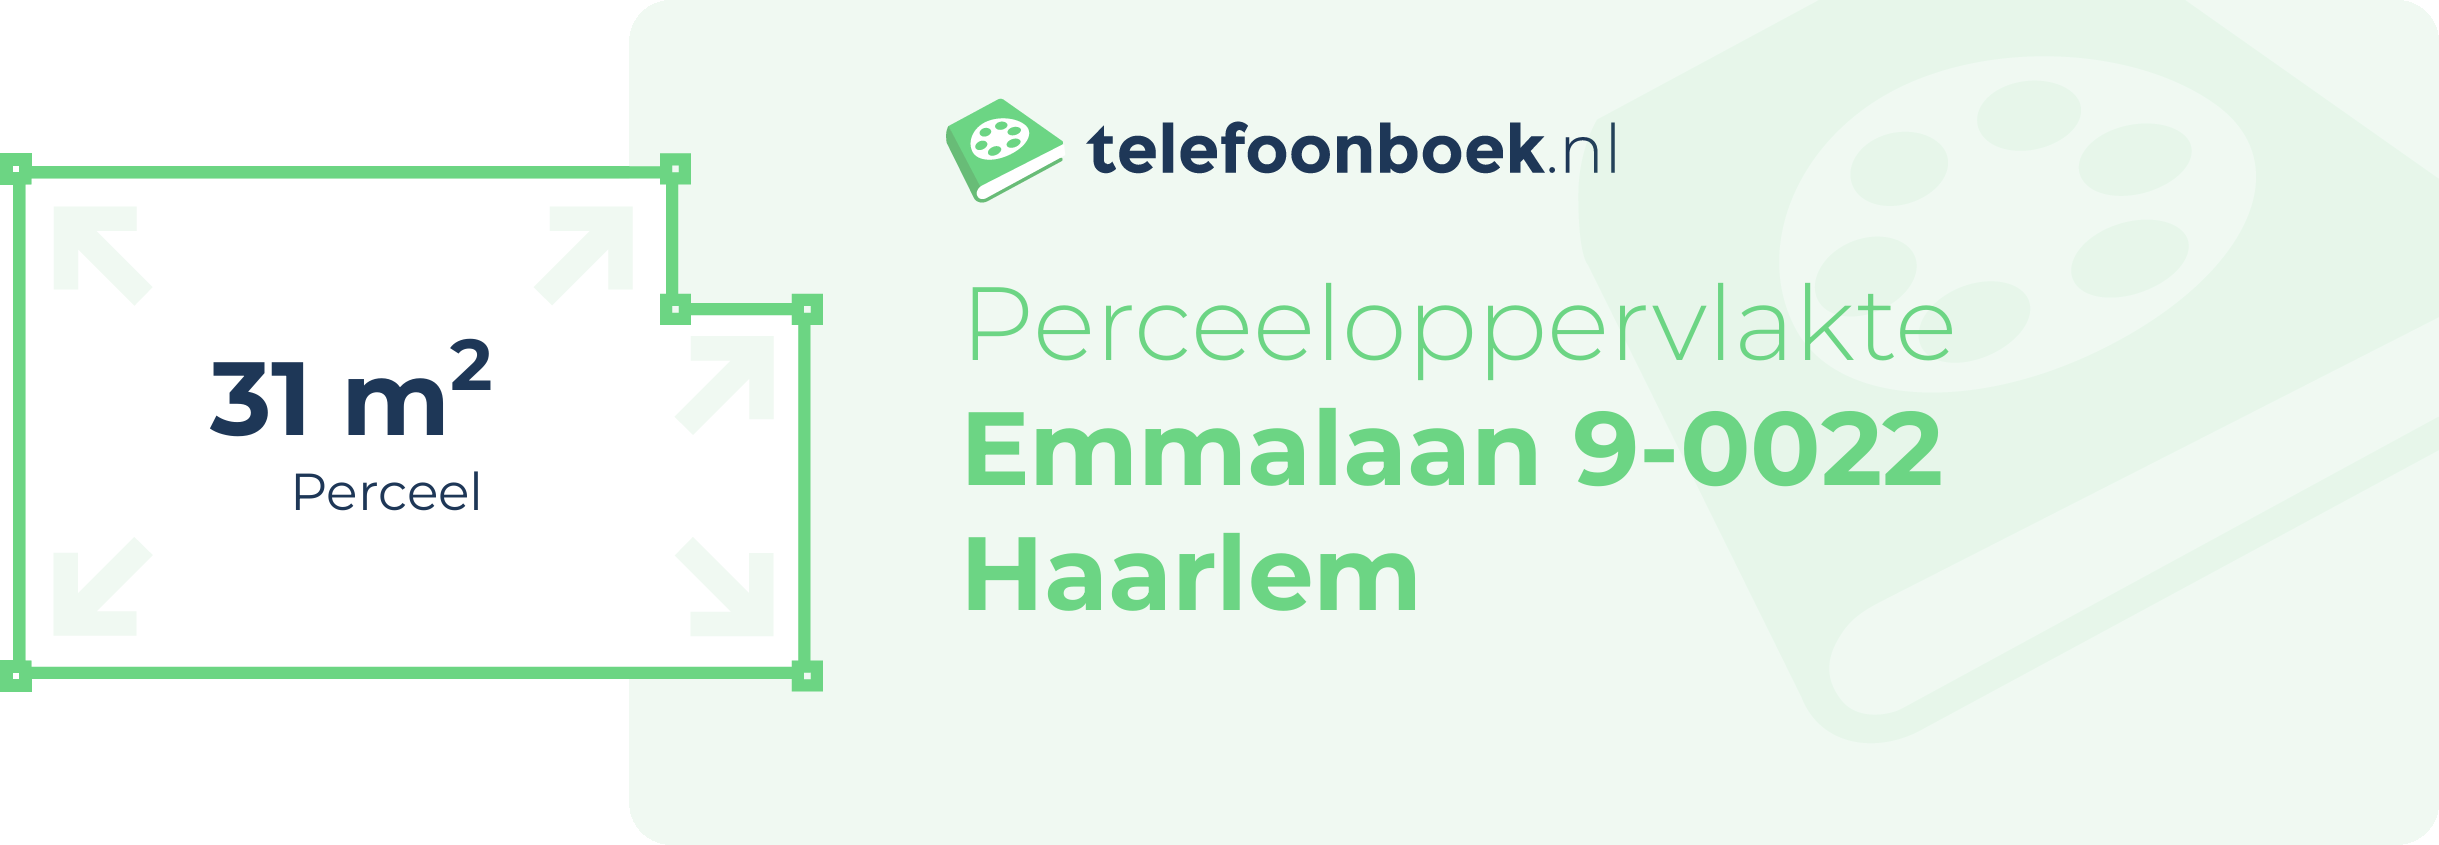 Perceeloppervlakte Emmalaan 9-0022 Haarlem